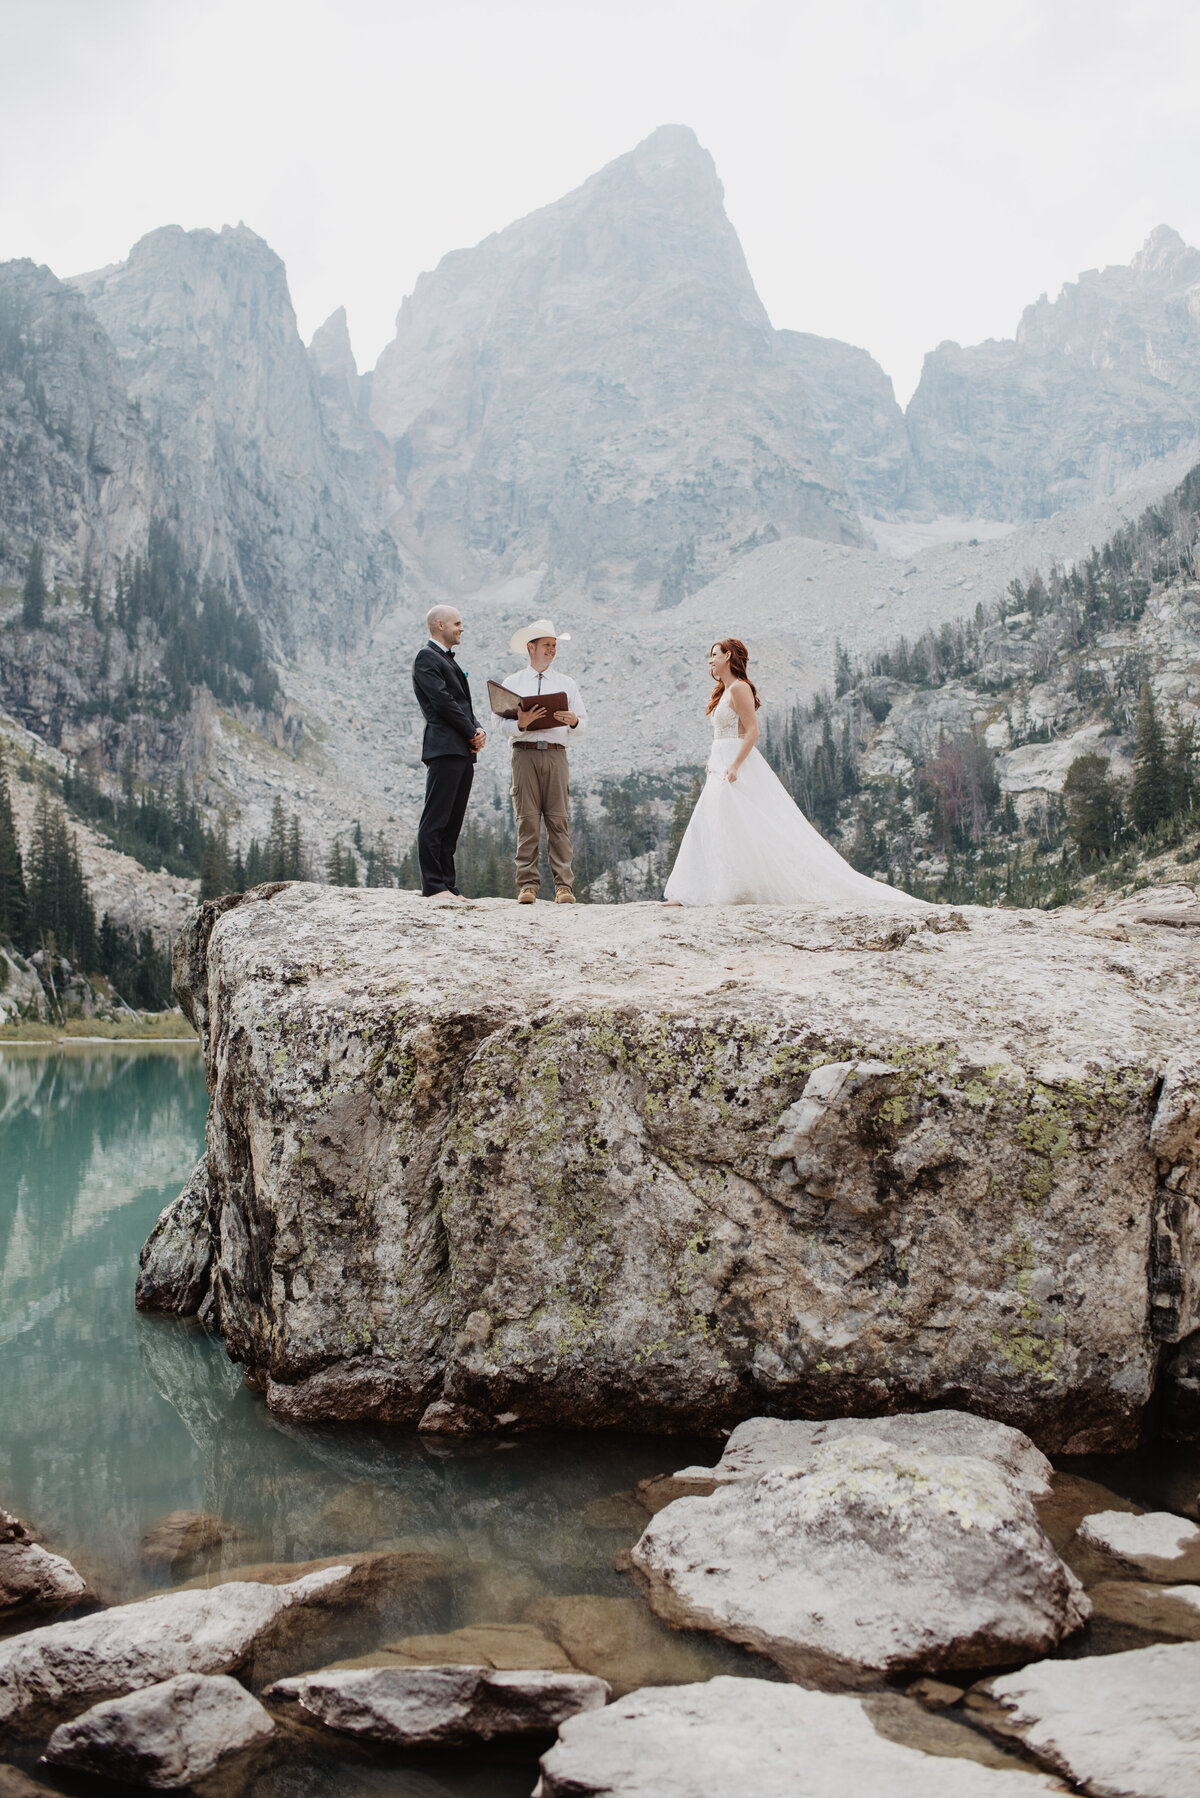 Jackson Hole photographers capture bride and groom during intimate wedding ceremony